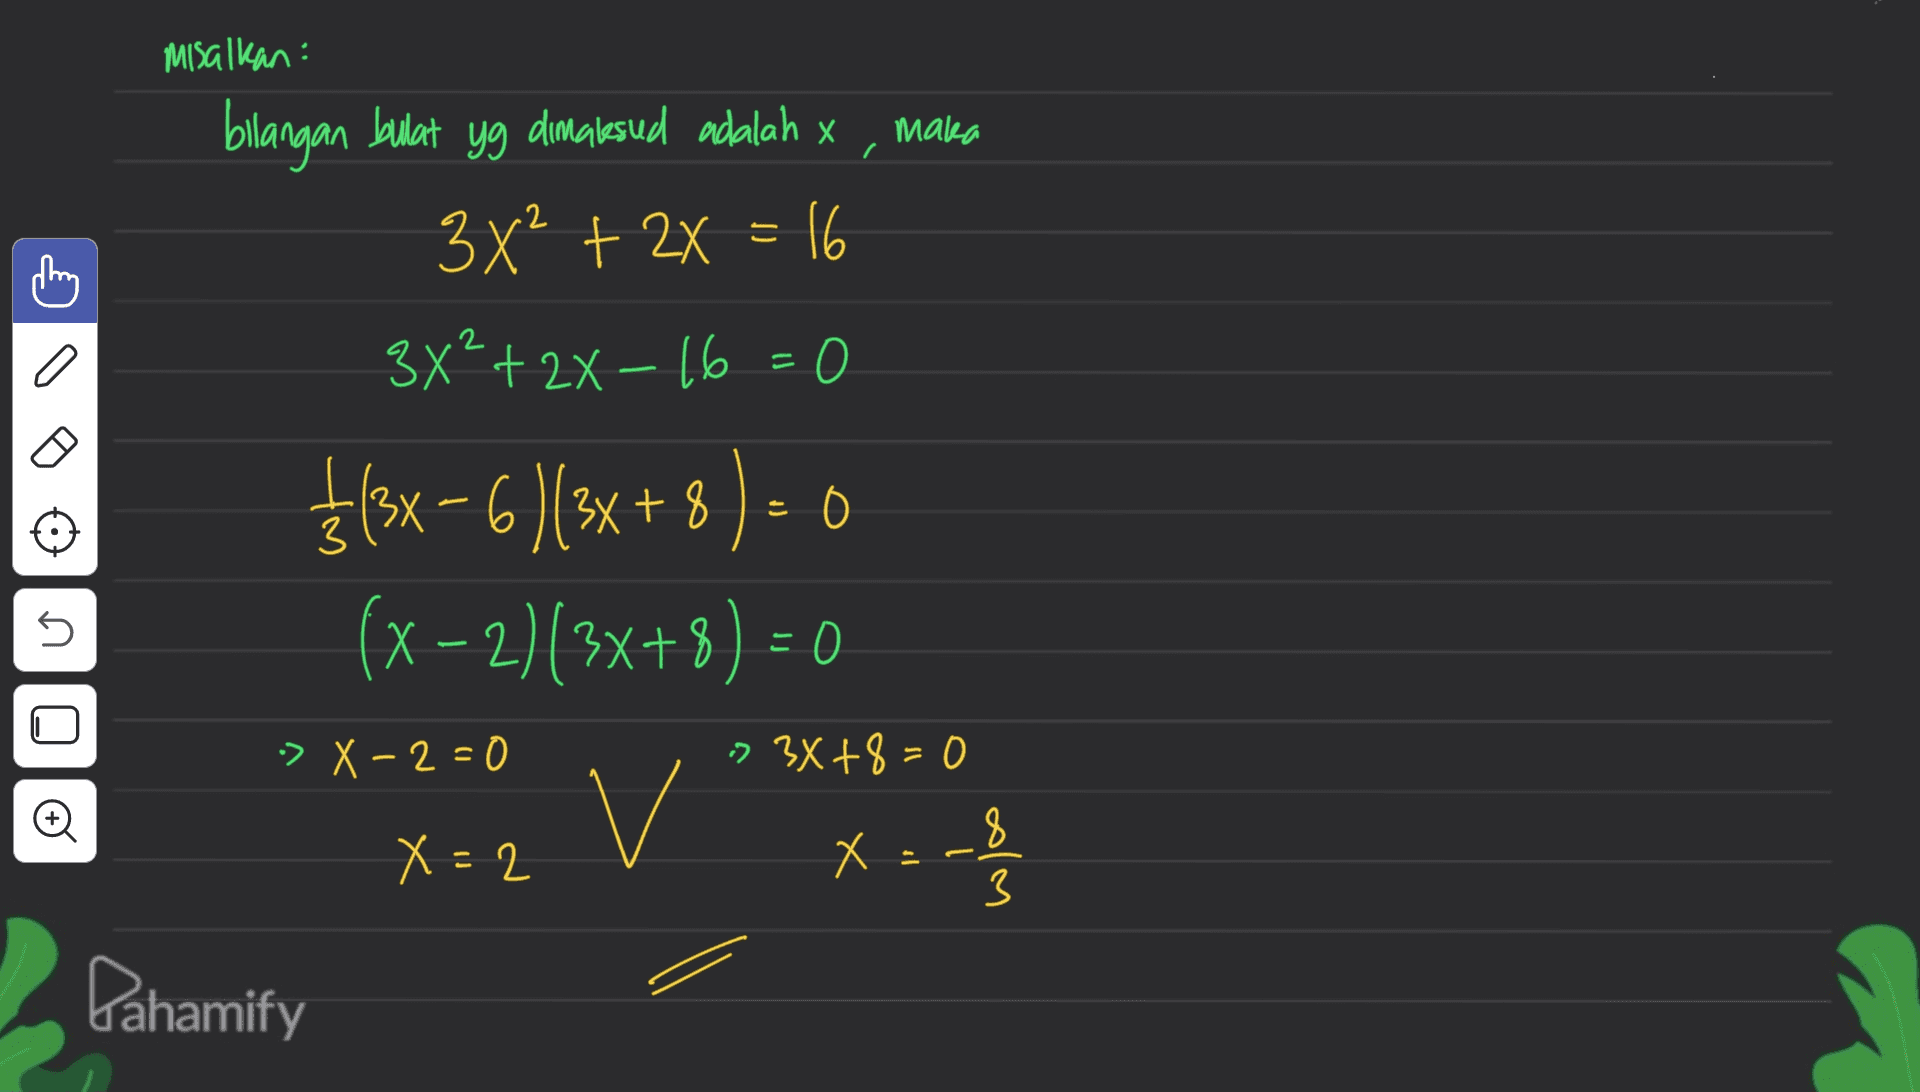 misalkan : yg dimalesud adalah x maka bilangan bulat 3x2 + 2x = 16 S 2 o 0 E 3X²+2X-16=0 $(3x - 6 )(3x + 8) = 0 (x - 2)(3x+8) = 0 v 5 » X-2=0 » 3x+8=0 X=2 X X:28 3 Dahamify 